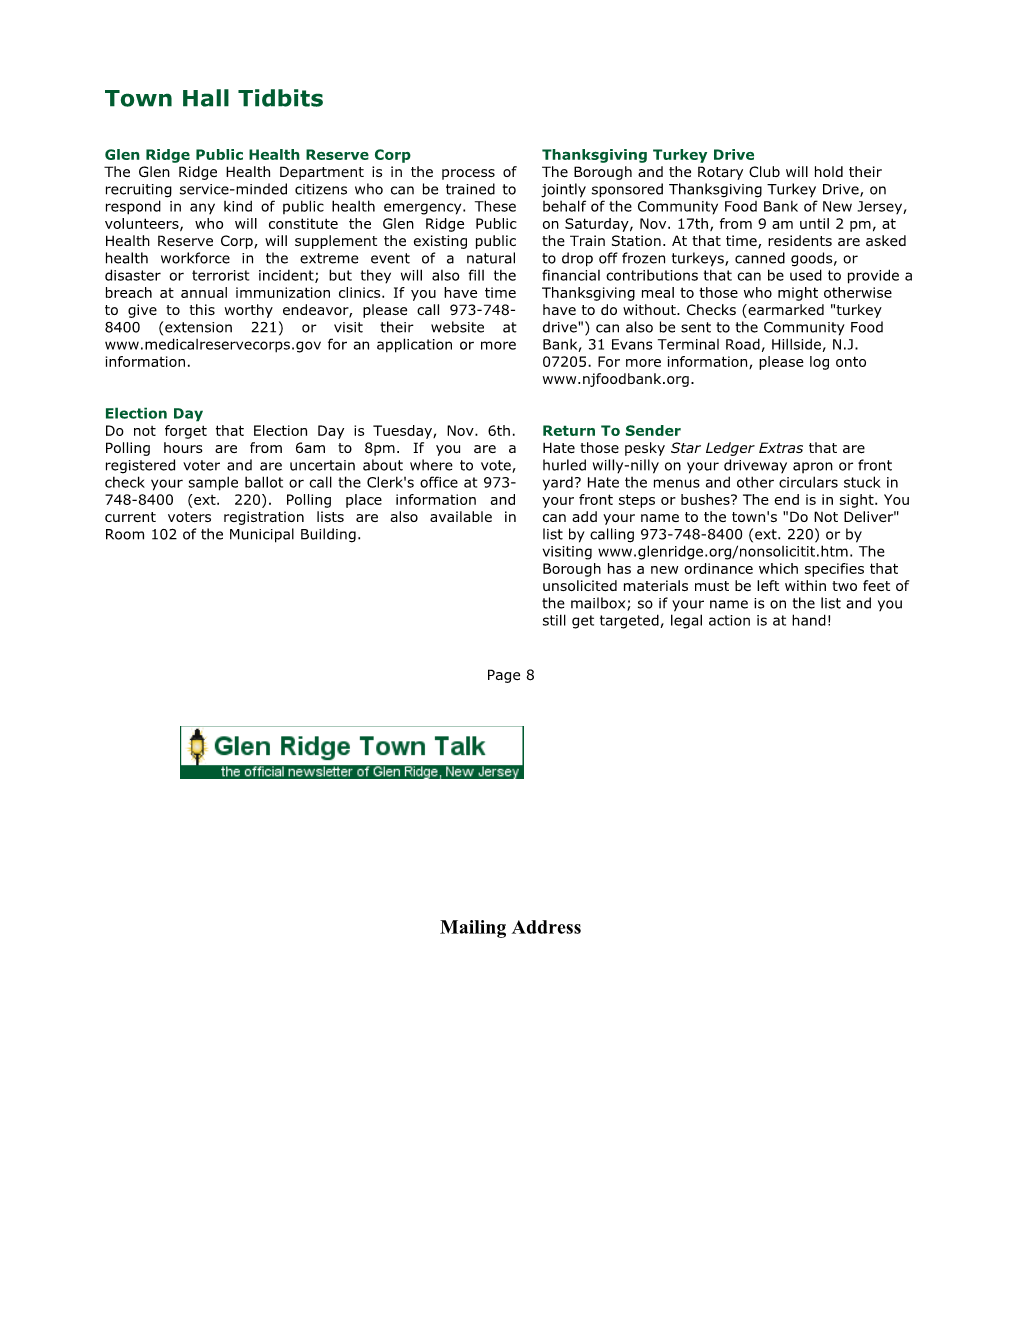 GR Newsletter Page 8